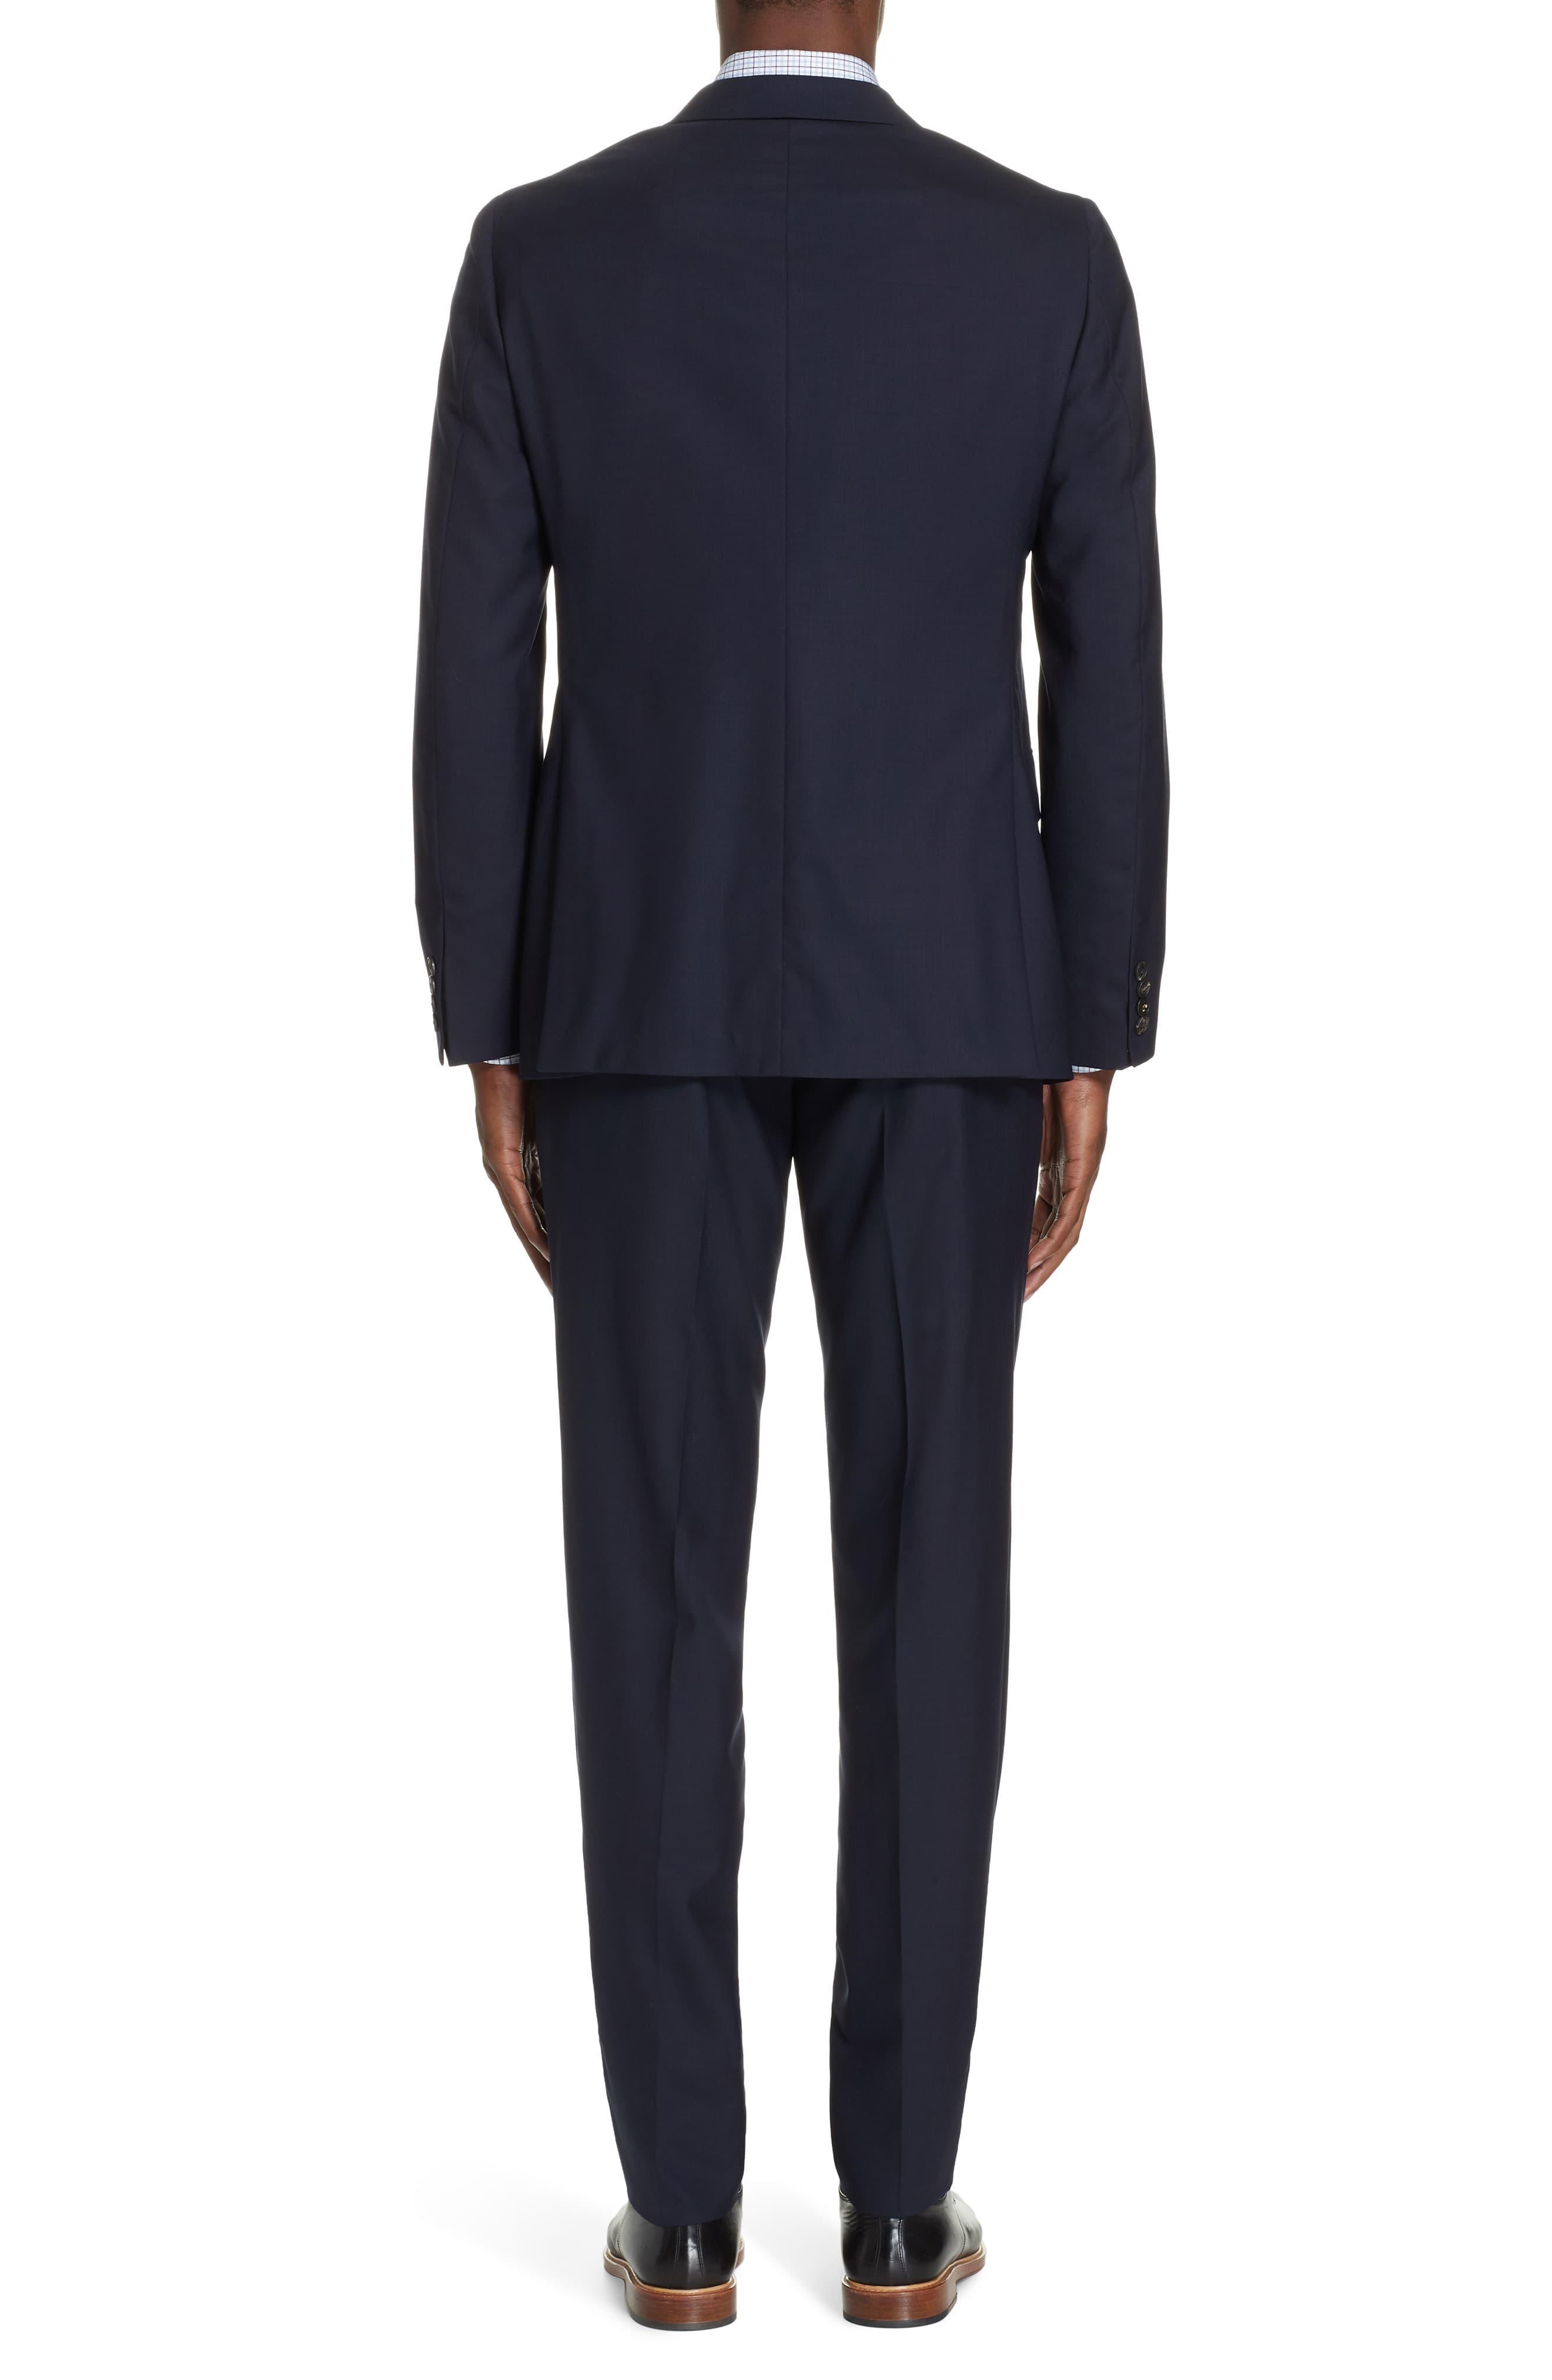 Boglioli Milano Slim Fit Solid Wool Suit in Navy (Blue) for Men - Lyst